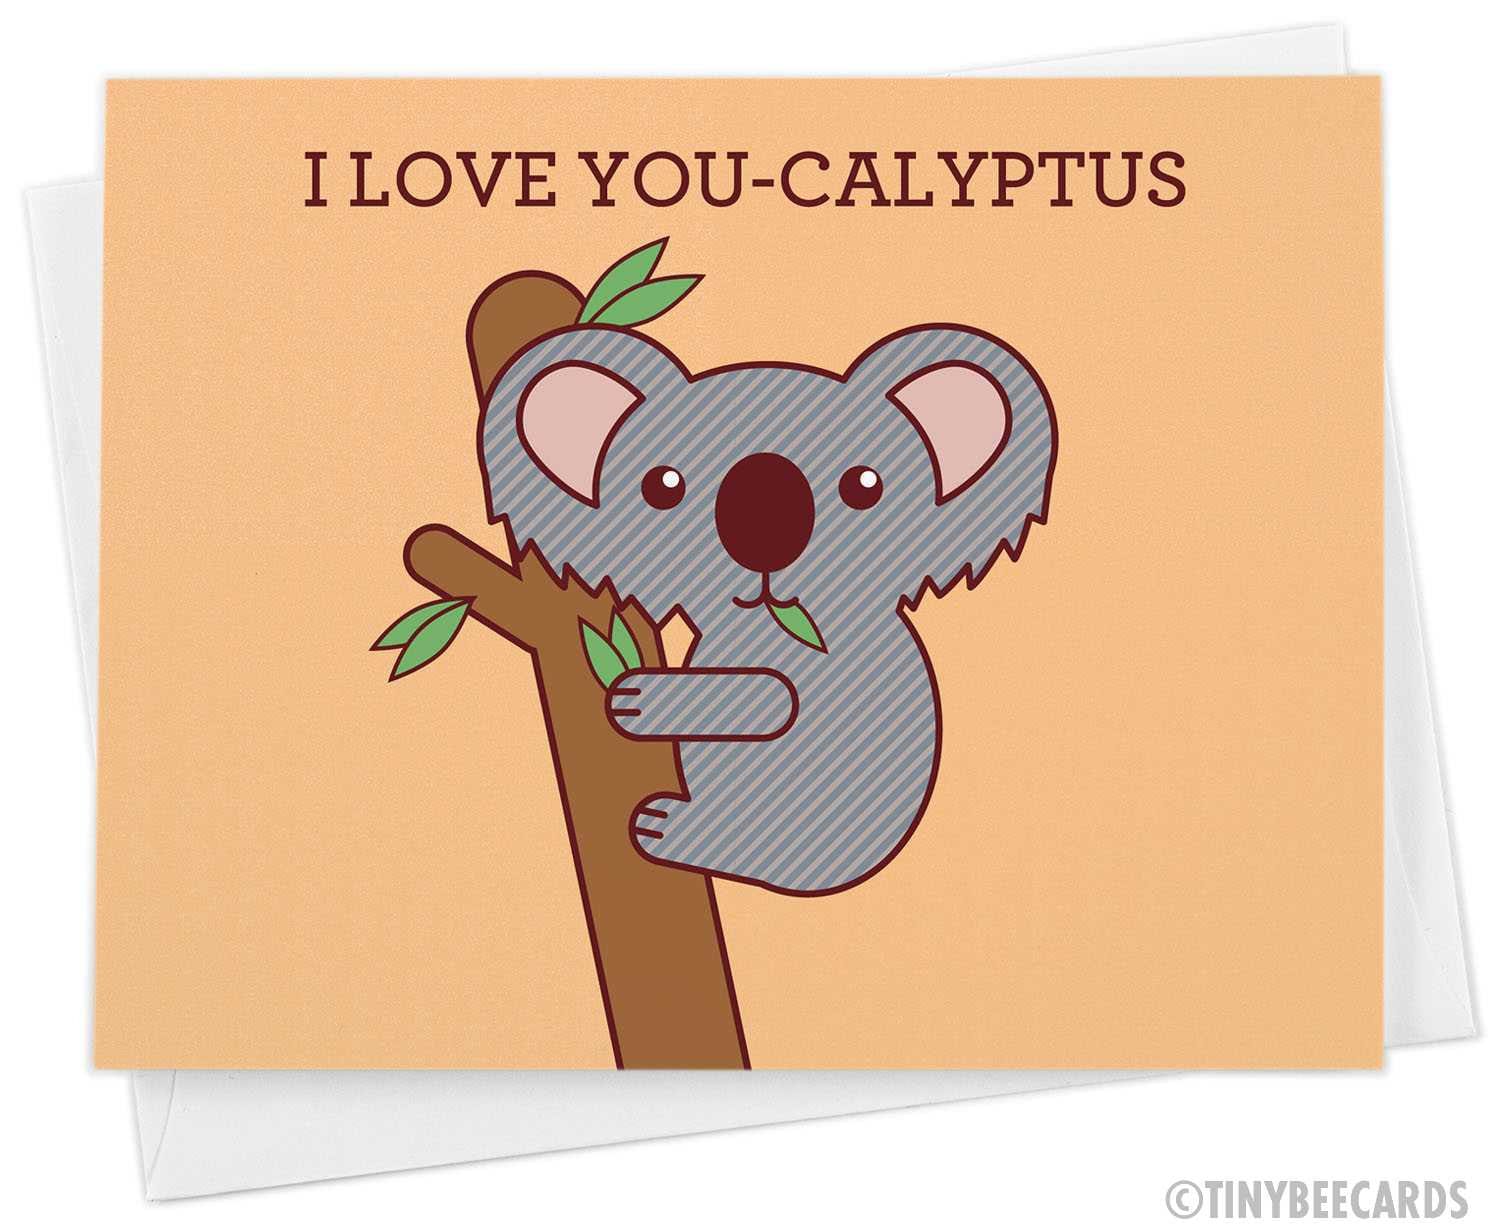 I Love You-calyptus Card Cute Koala Animal Pun Card Funny - Etsy